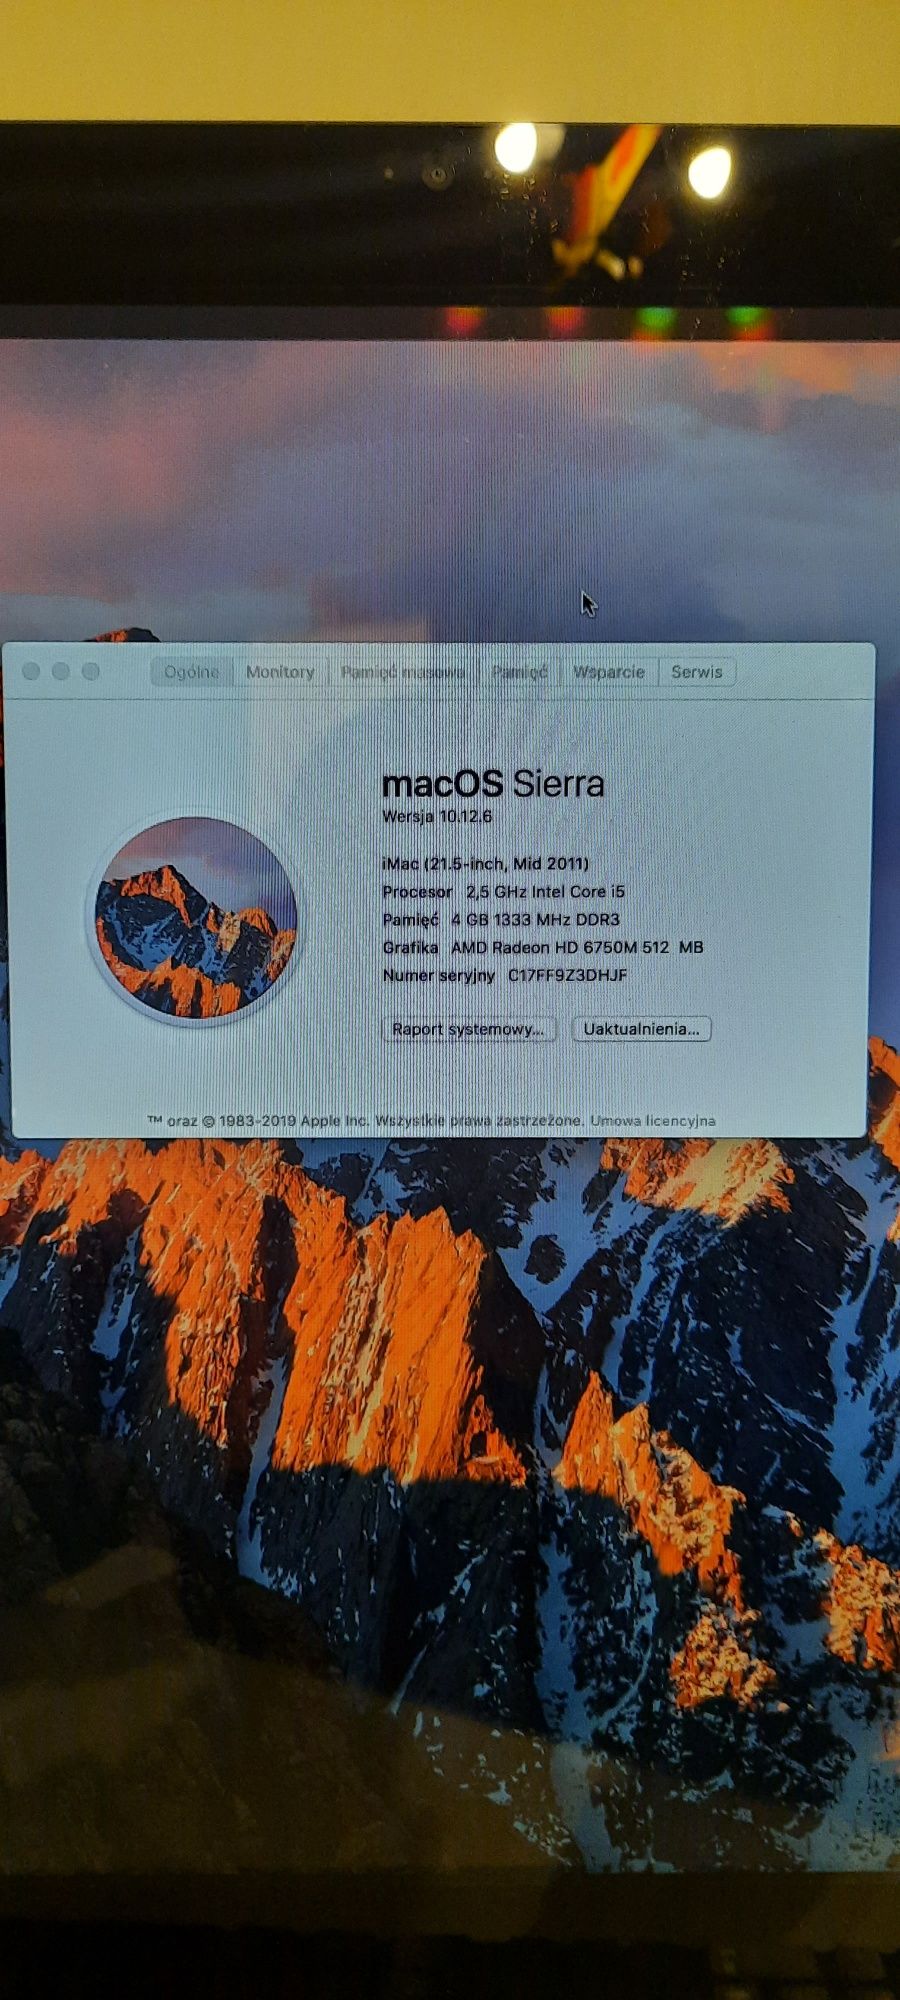 iMac 21,5-inch, Mid 2011